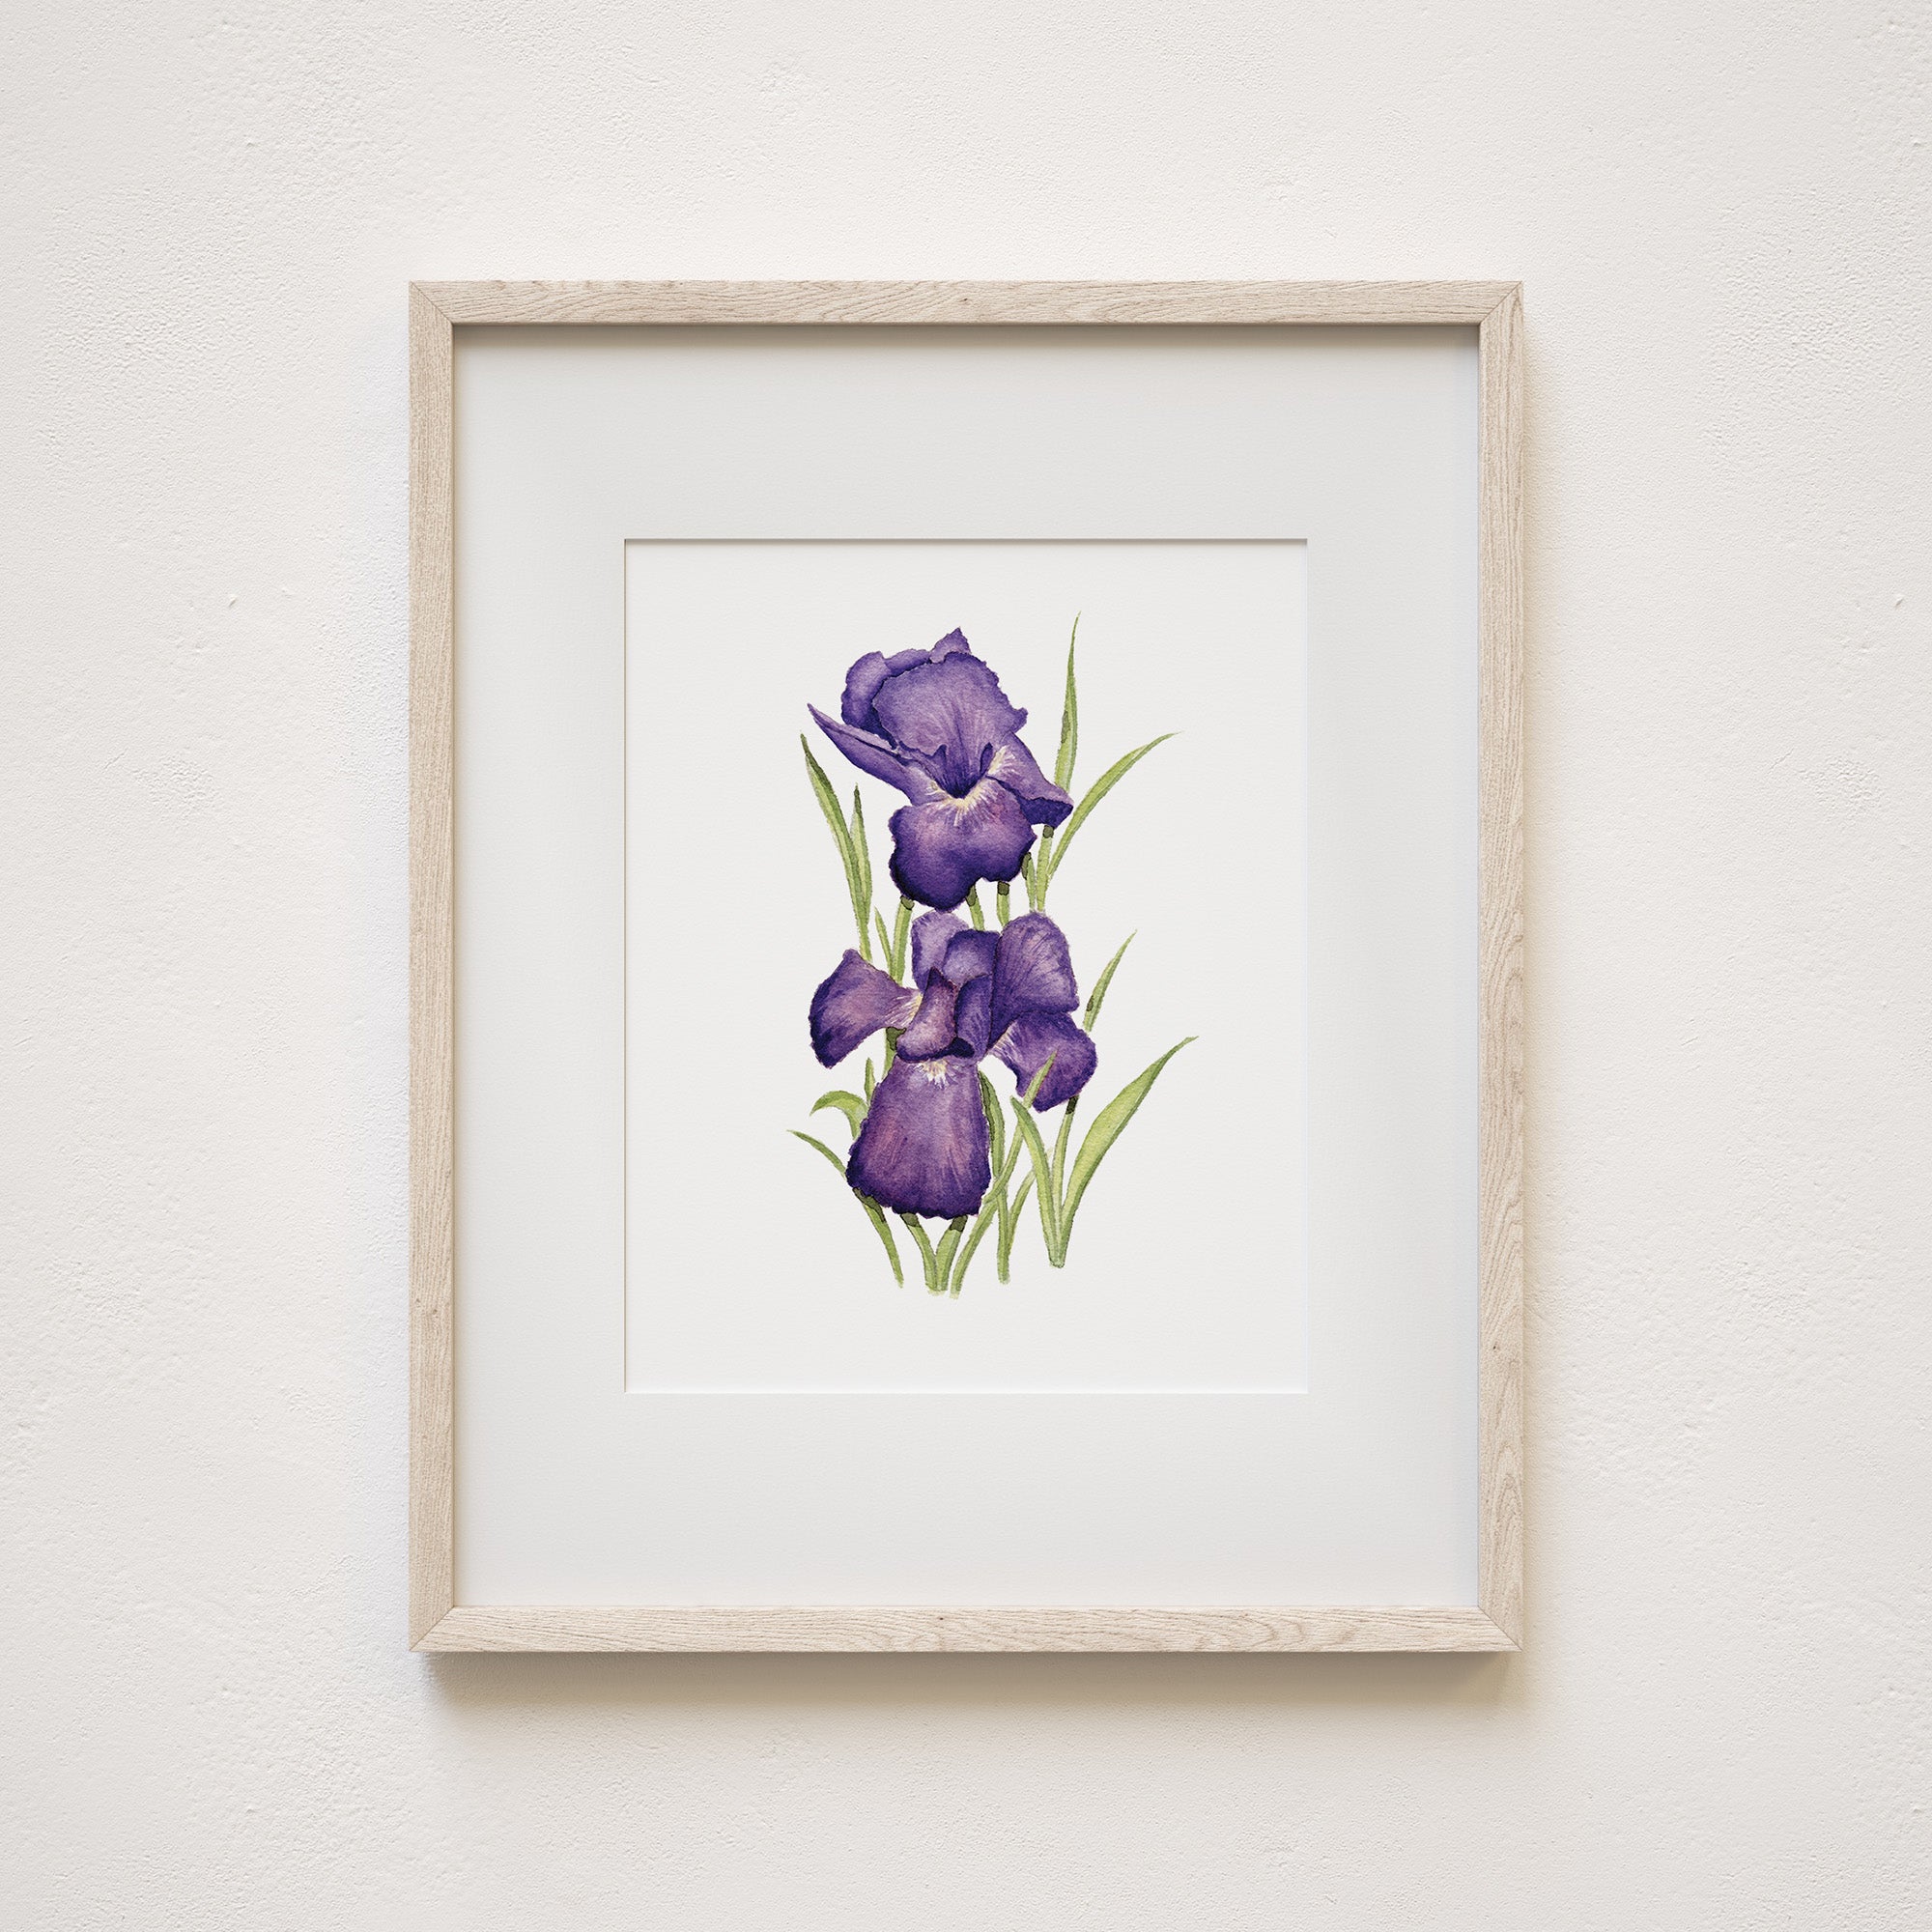 Watercolor print of an iris flower.